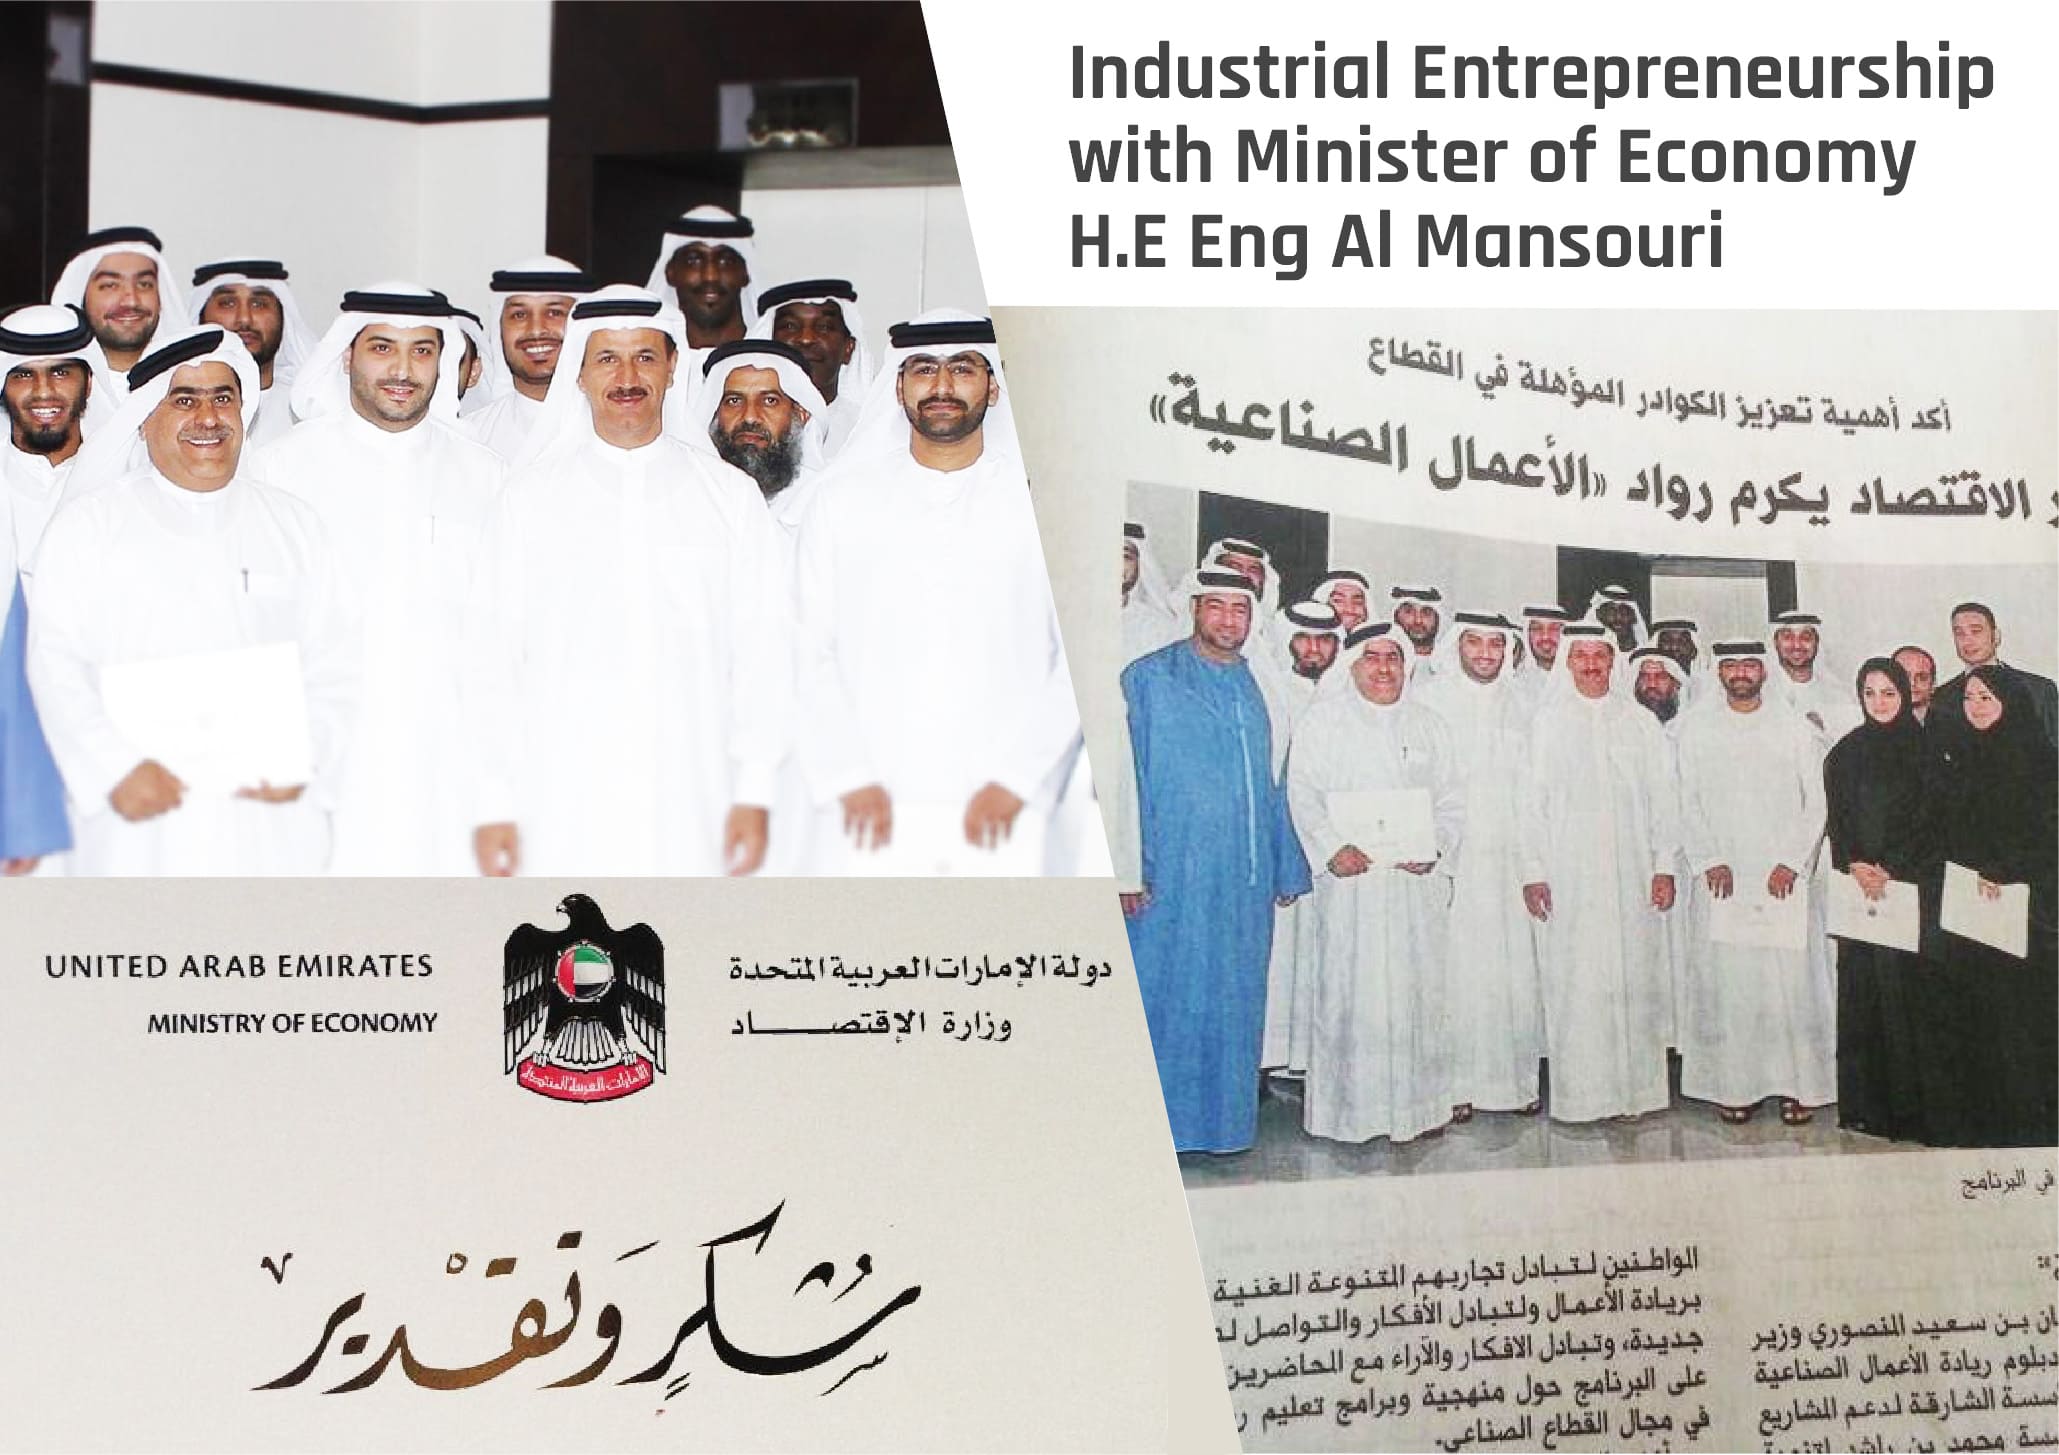 Armor Lubricants Industrial Entrepreneurship UAE programme Participation Image